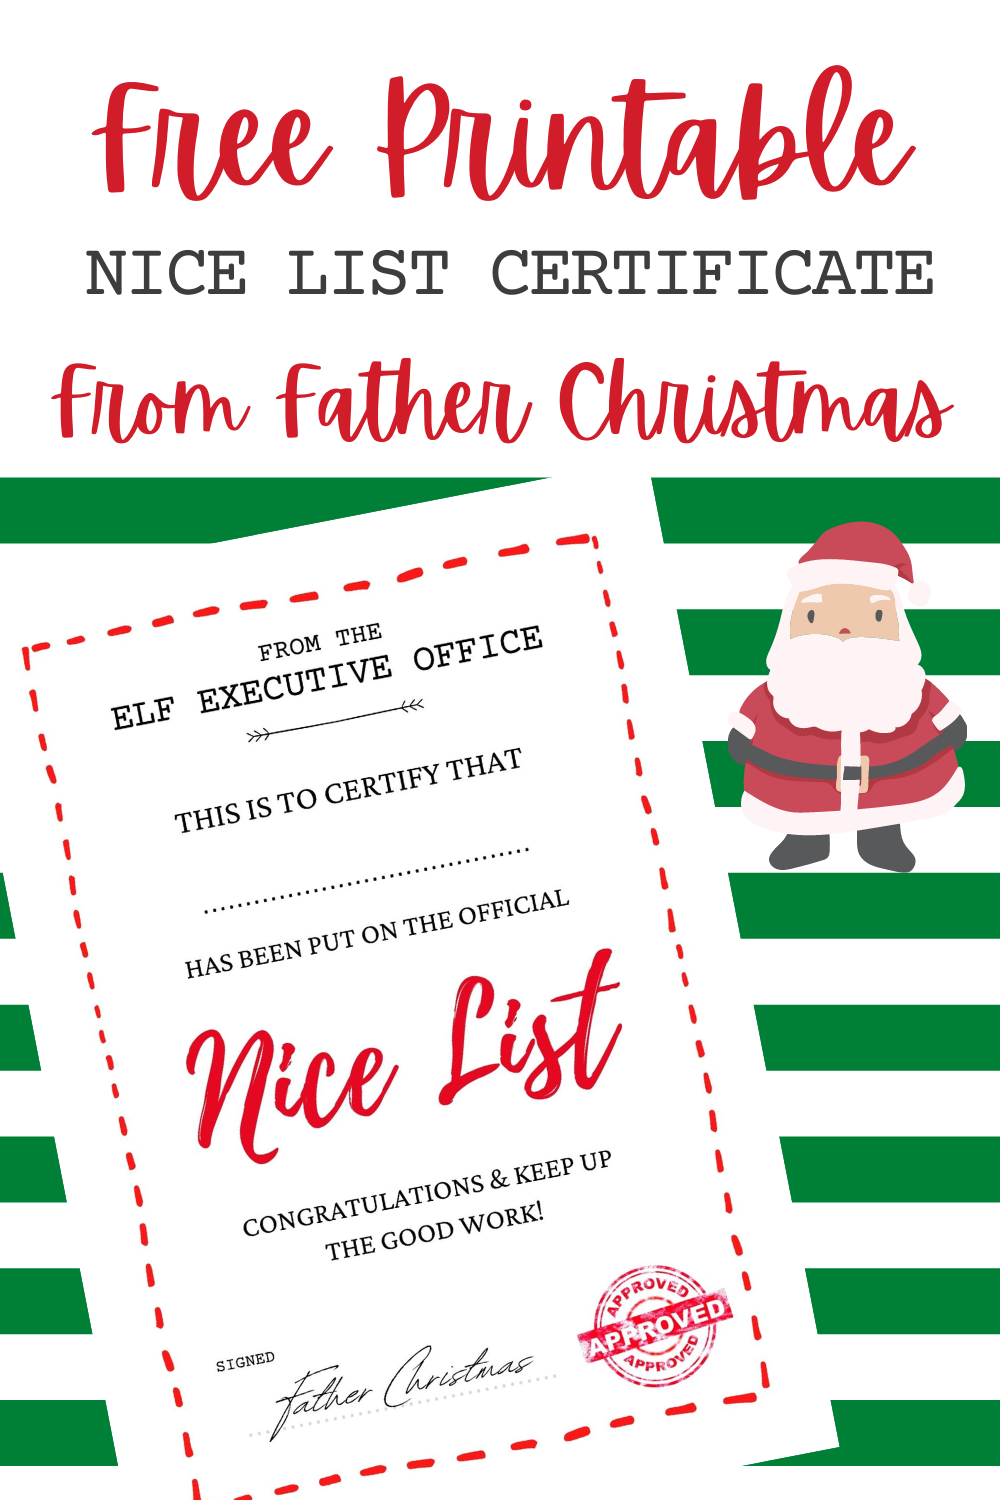 Free Printable Nice List Certificate Template Hodgepodgedays